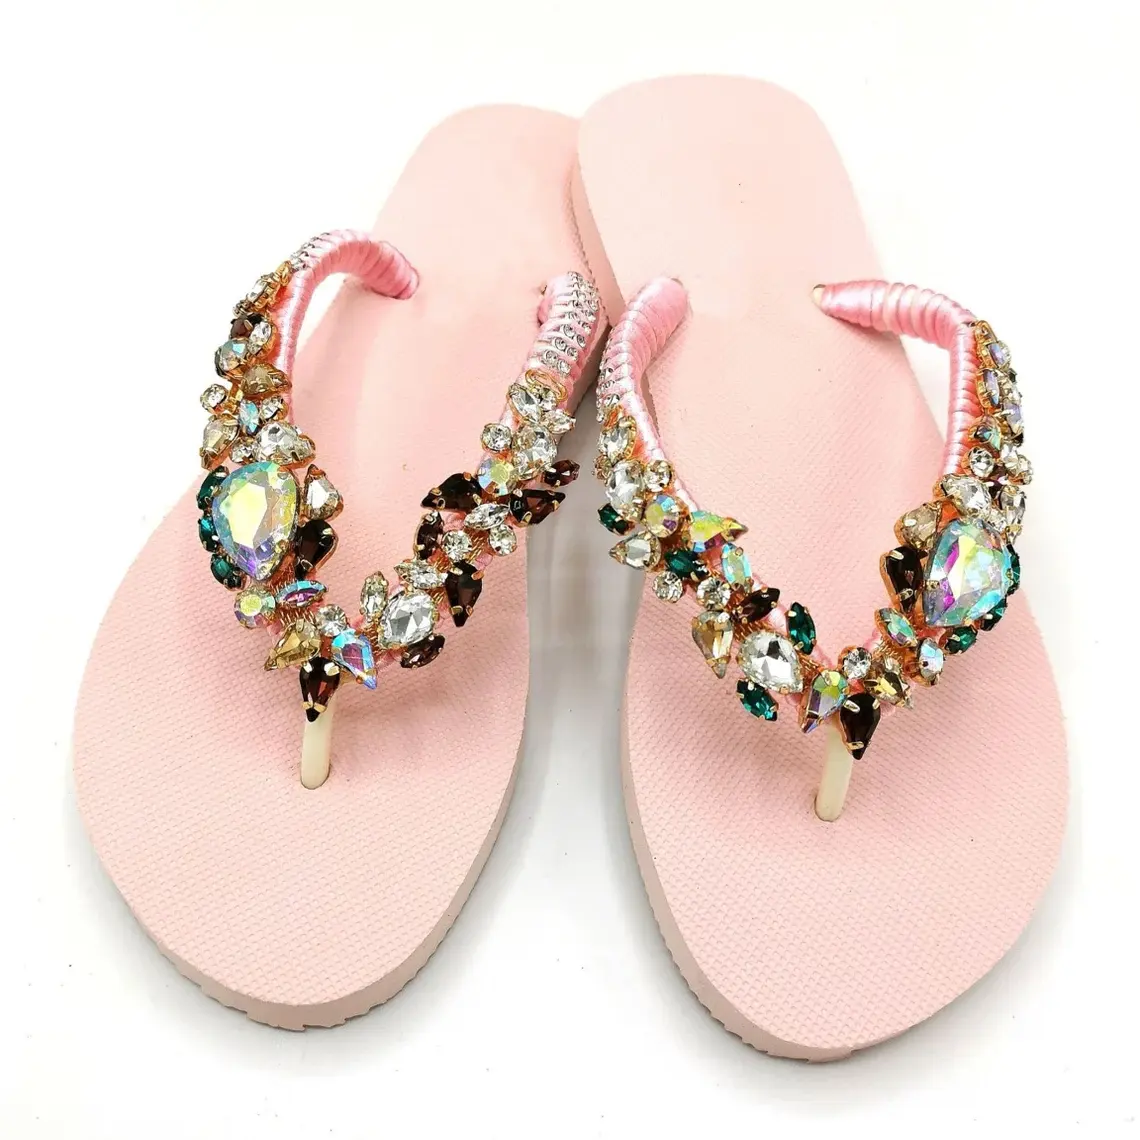 Lovely rhinestone women flip flops cute pink color beach wedding flip flops new arrival outdoor slippers